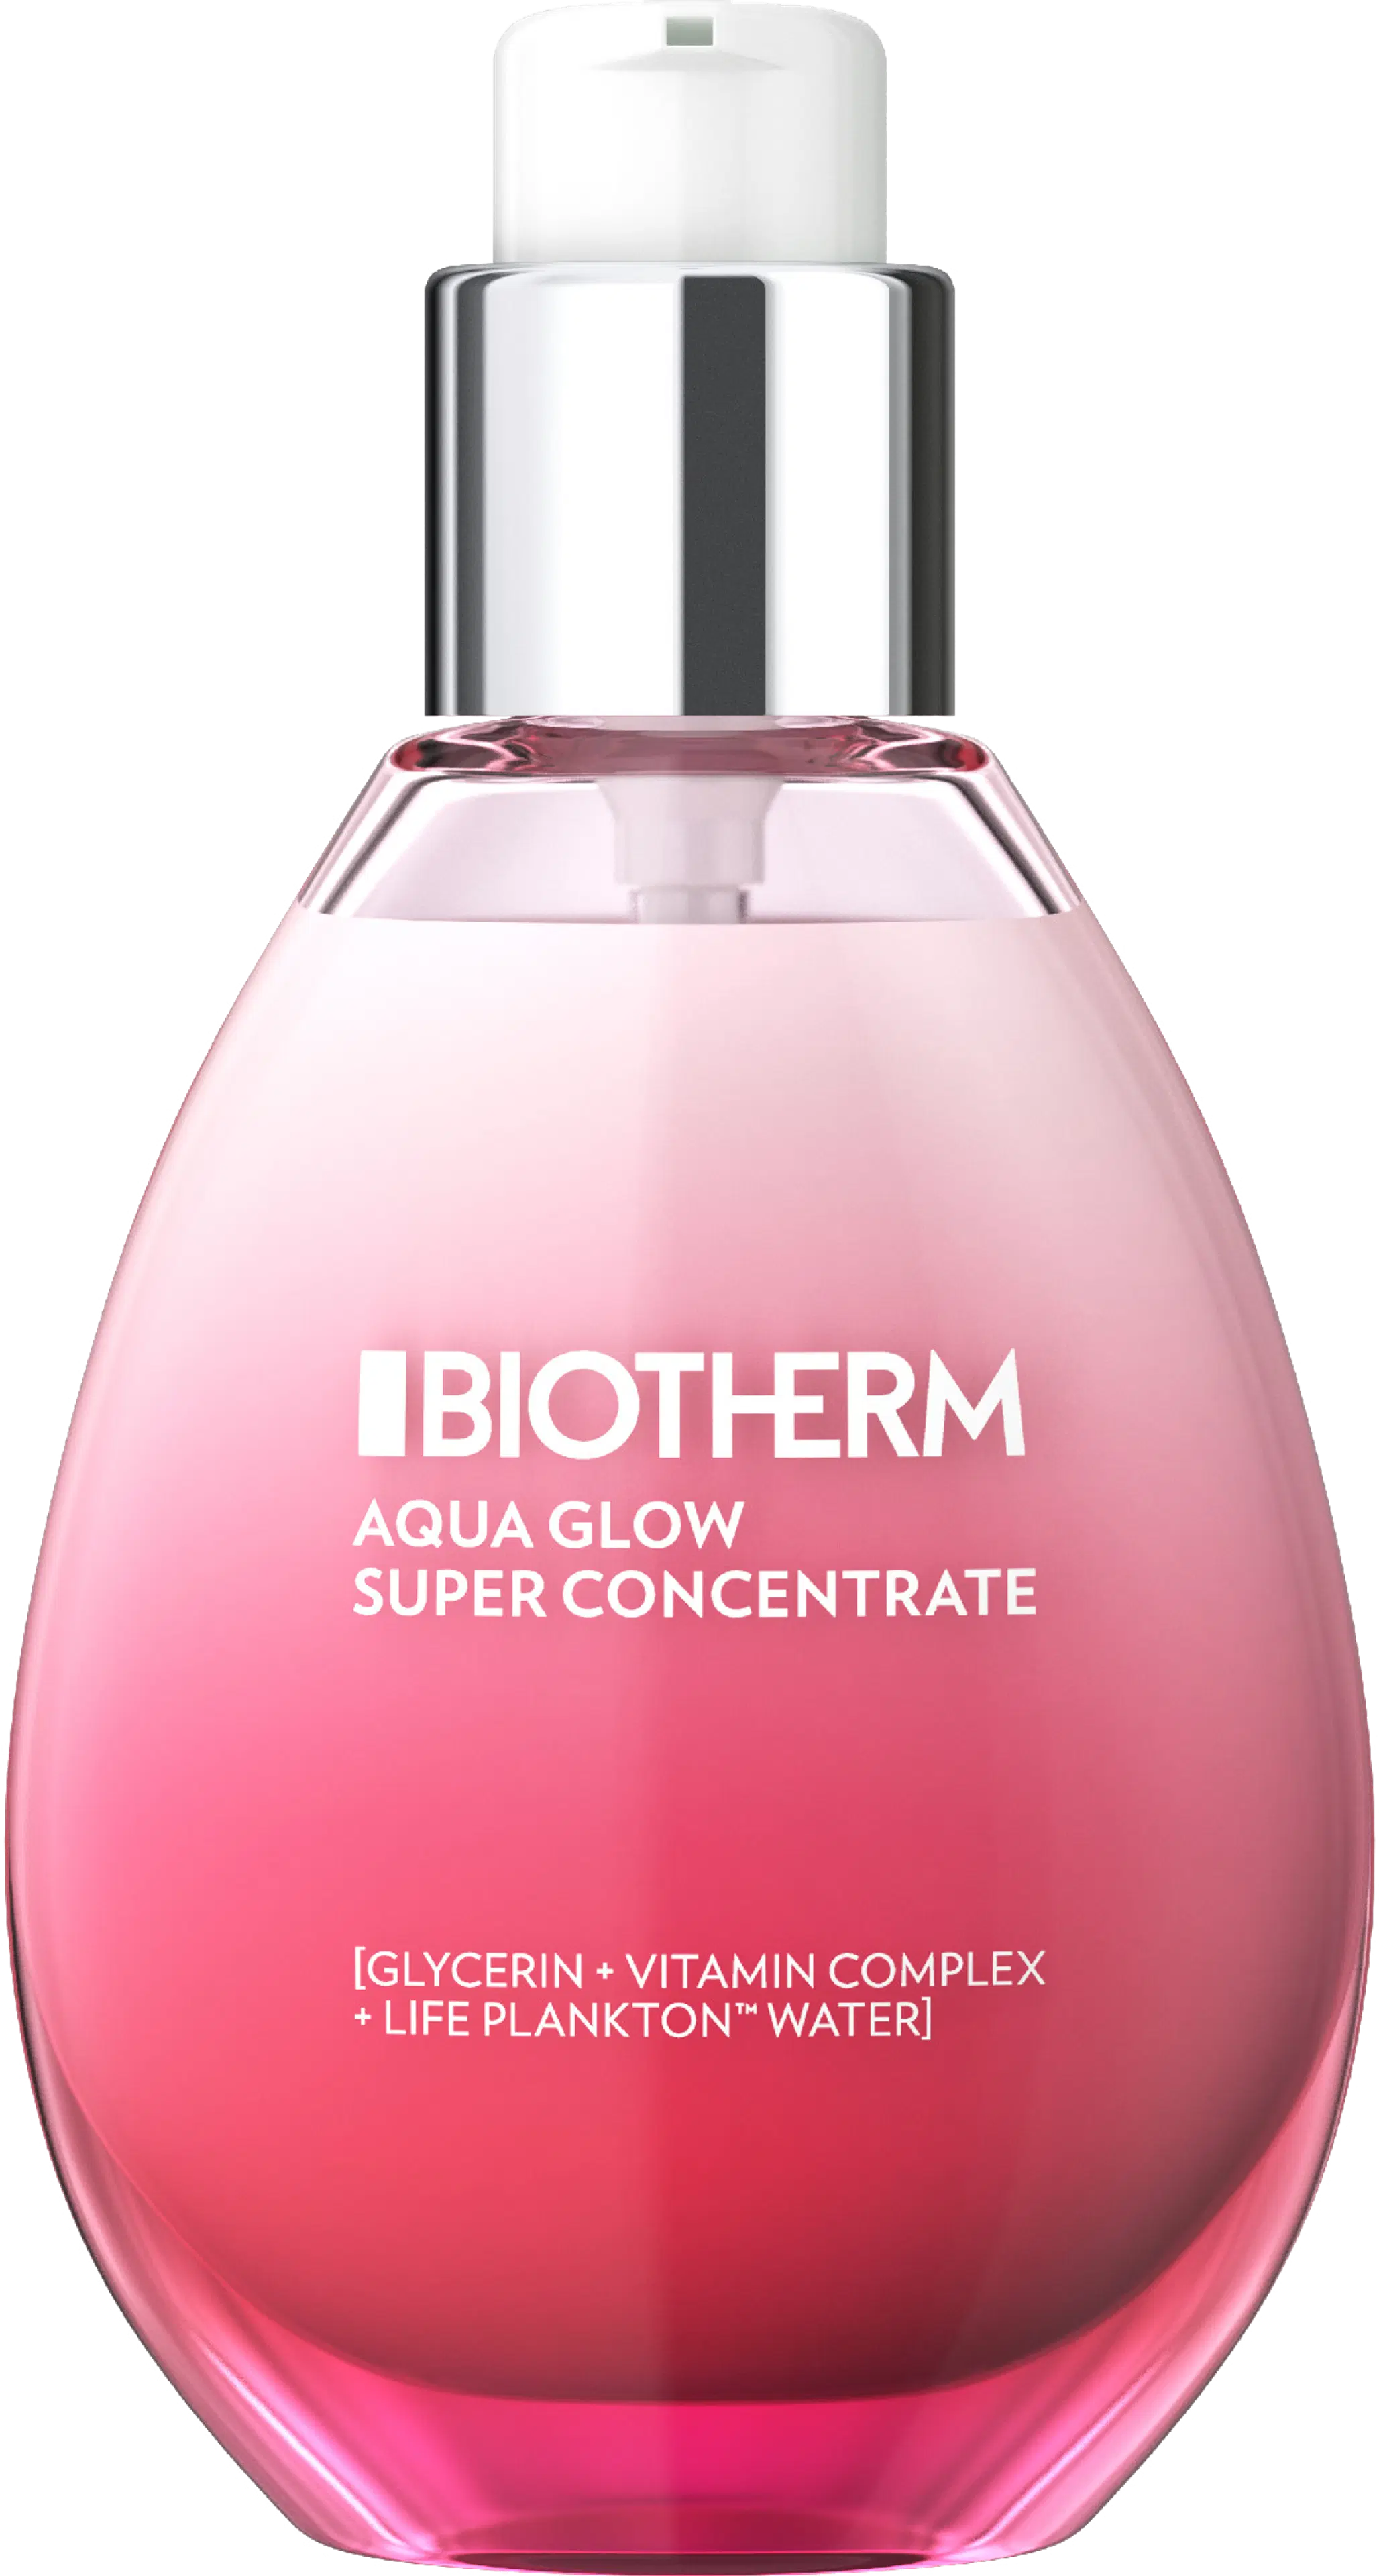 Biotherm Aqua Glow Super Concentrate emulsio 50 ml